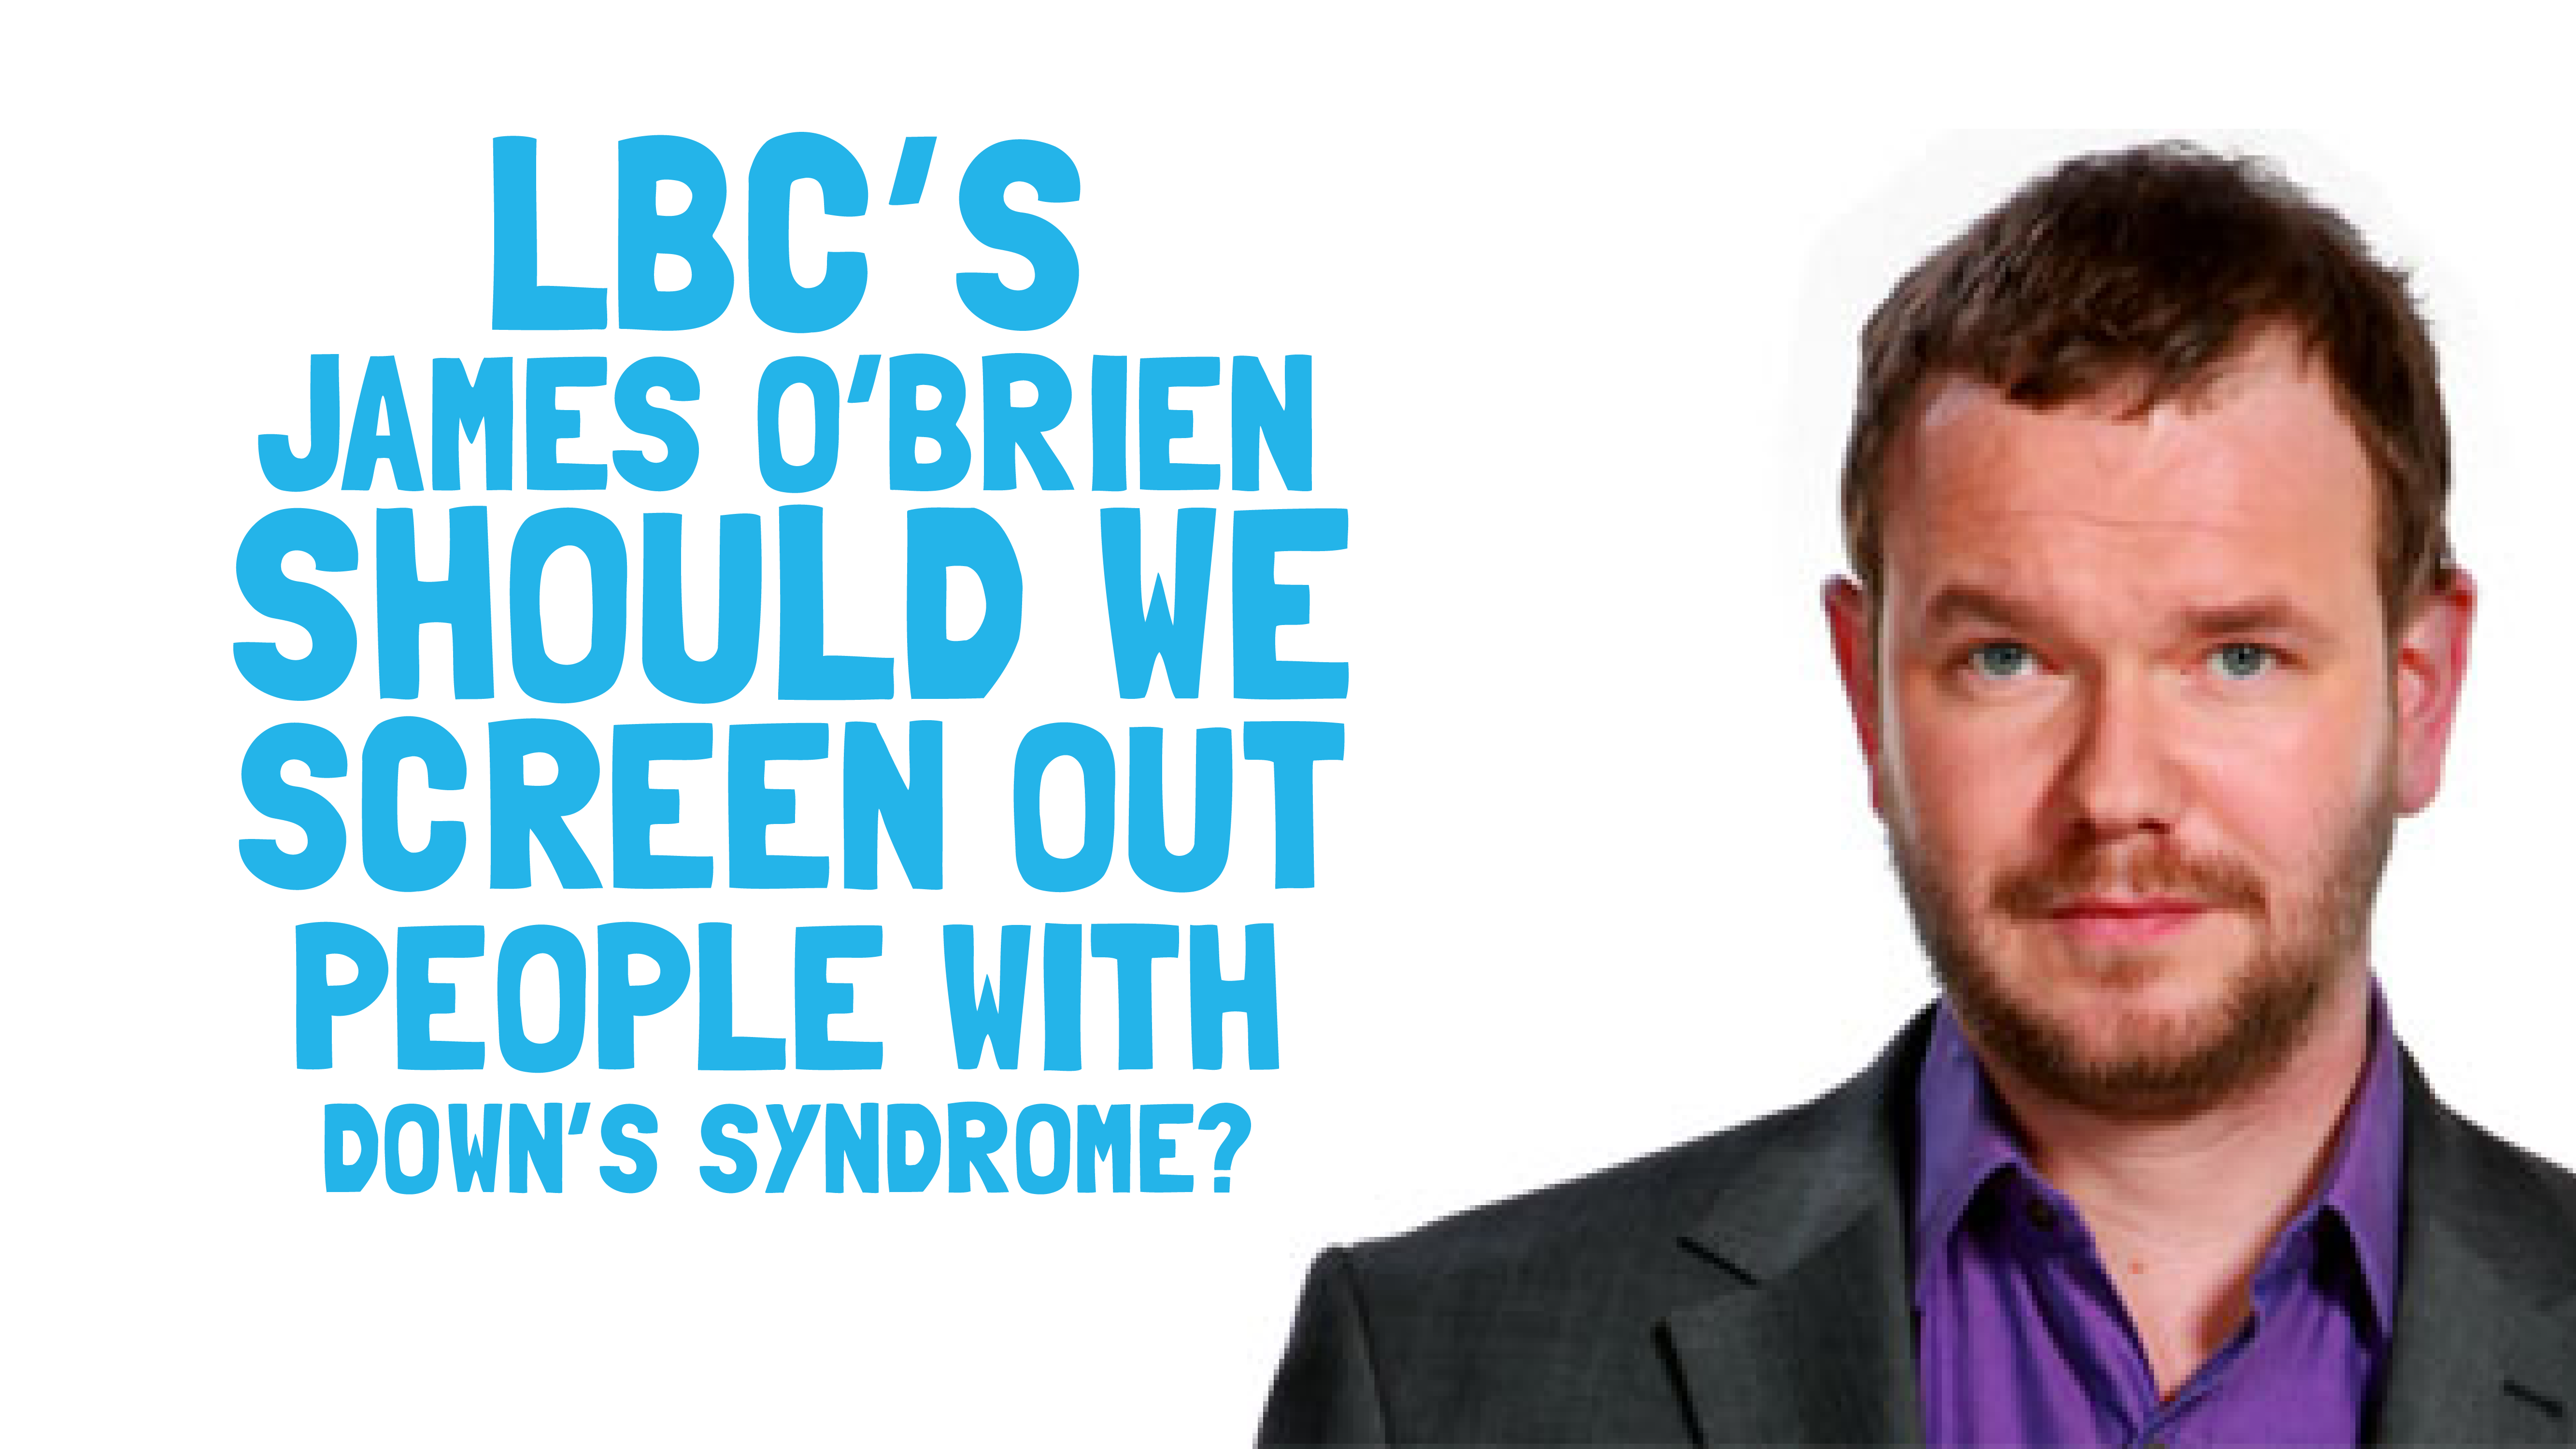 LBC Down's syndrome testing